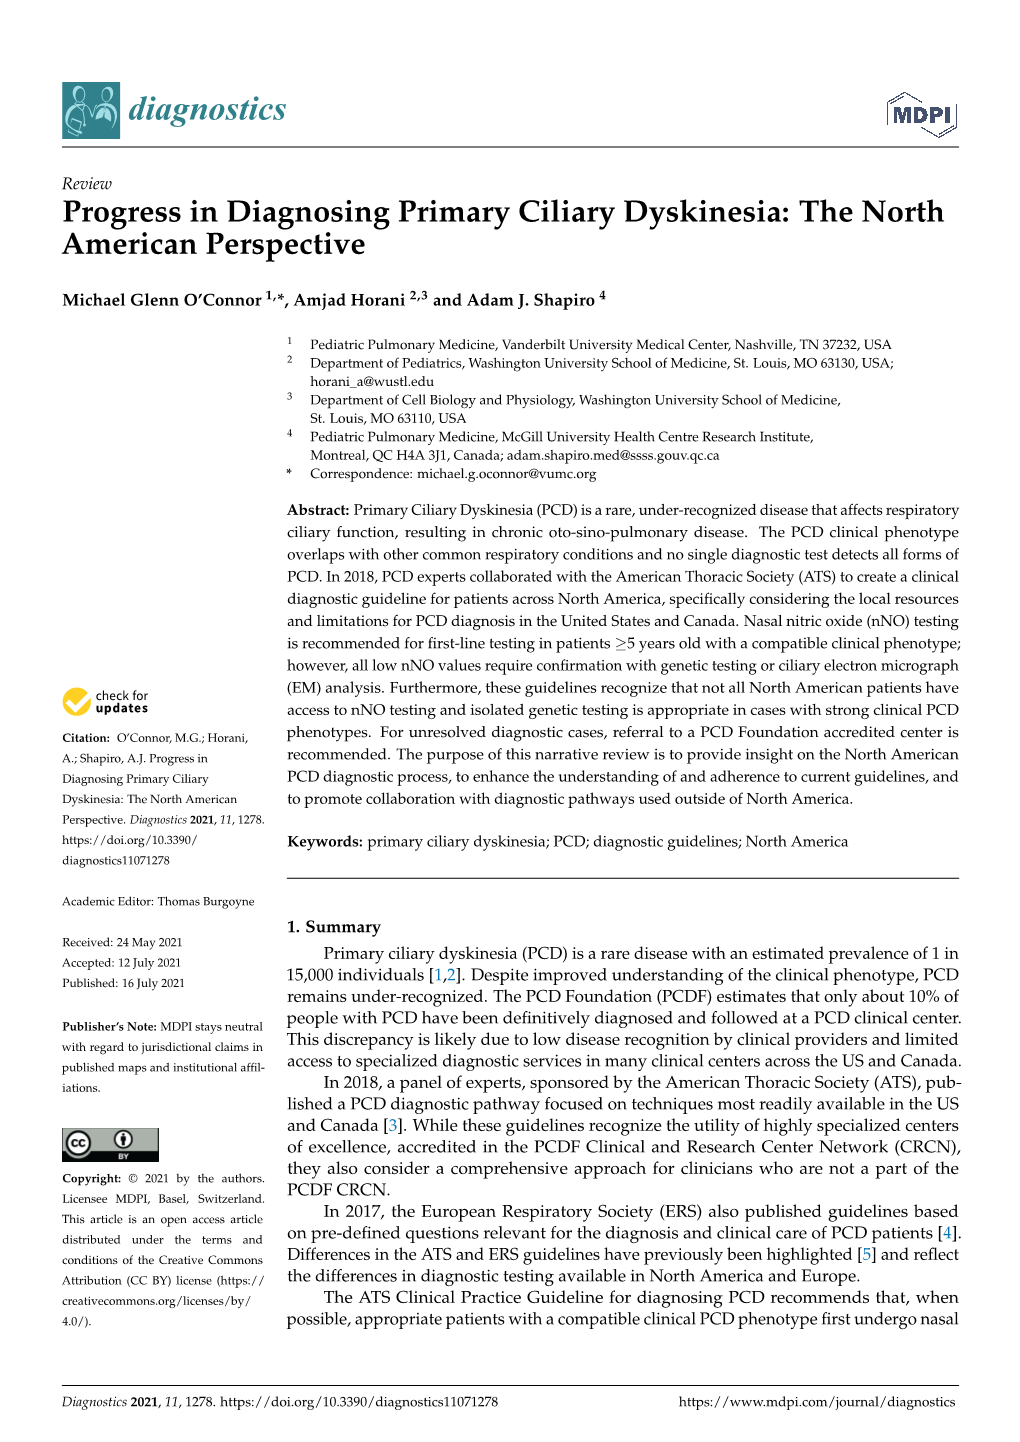 Progress in Diagnosing Primary Ciliary Dyskinesia: the North American Perspective